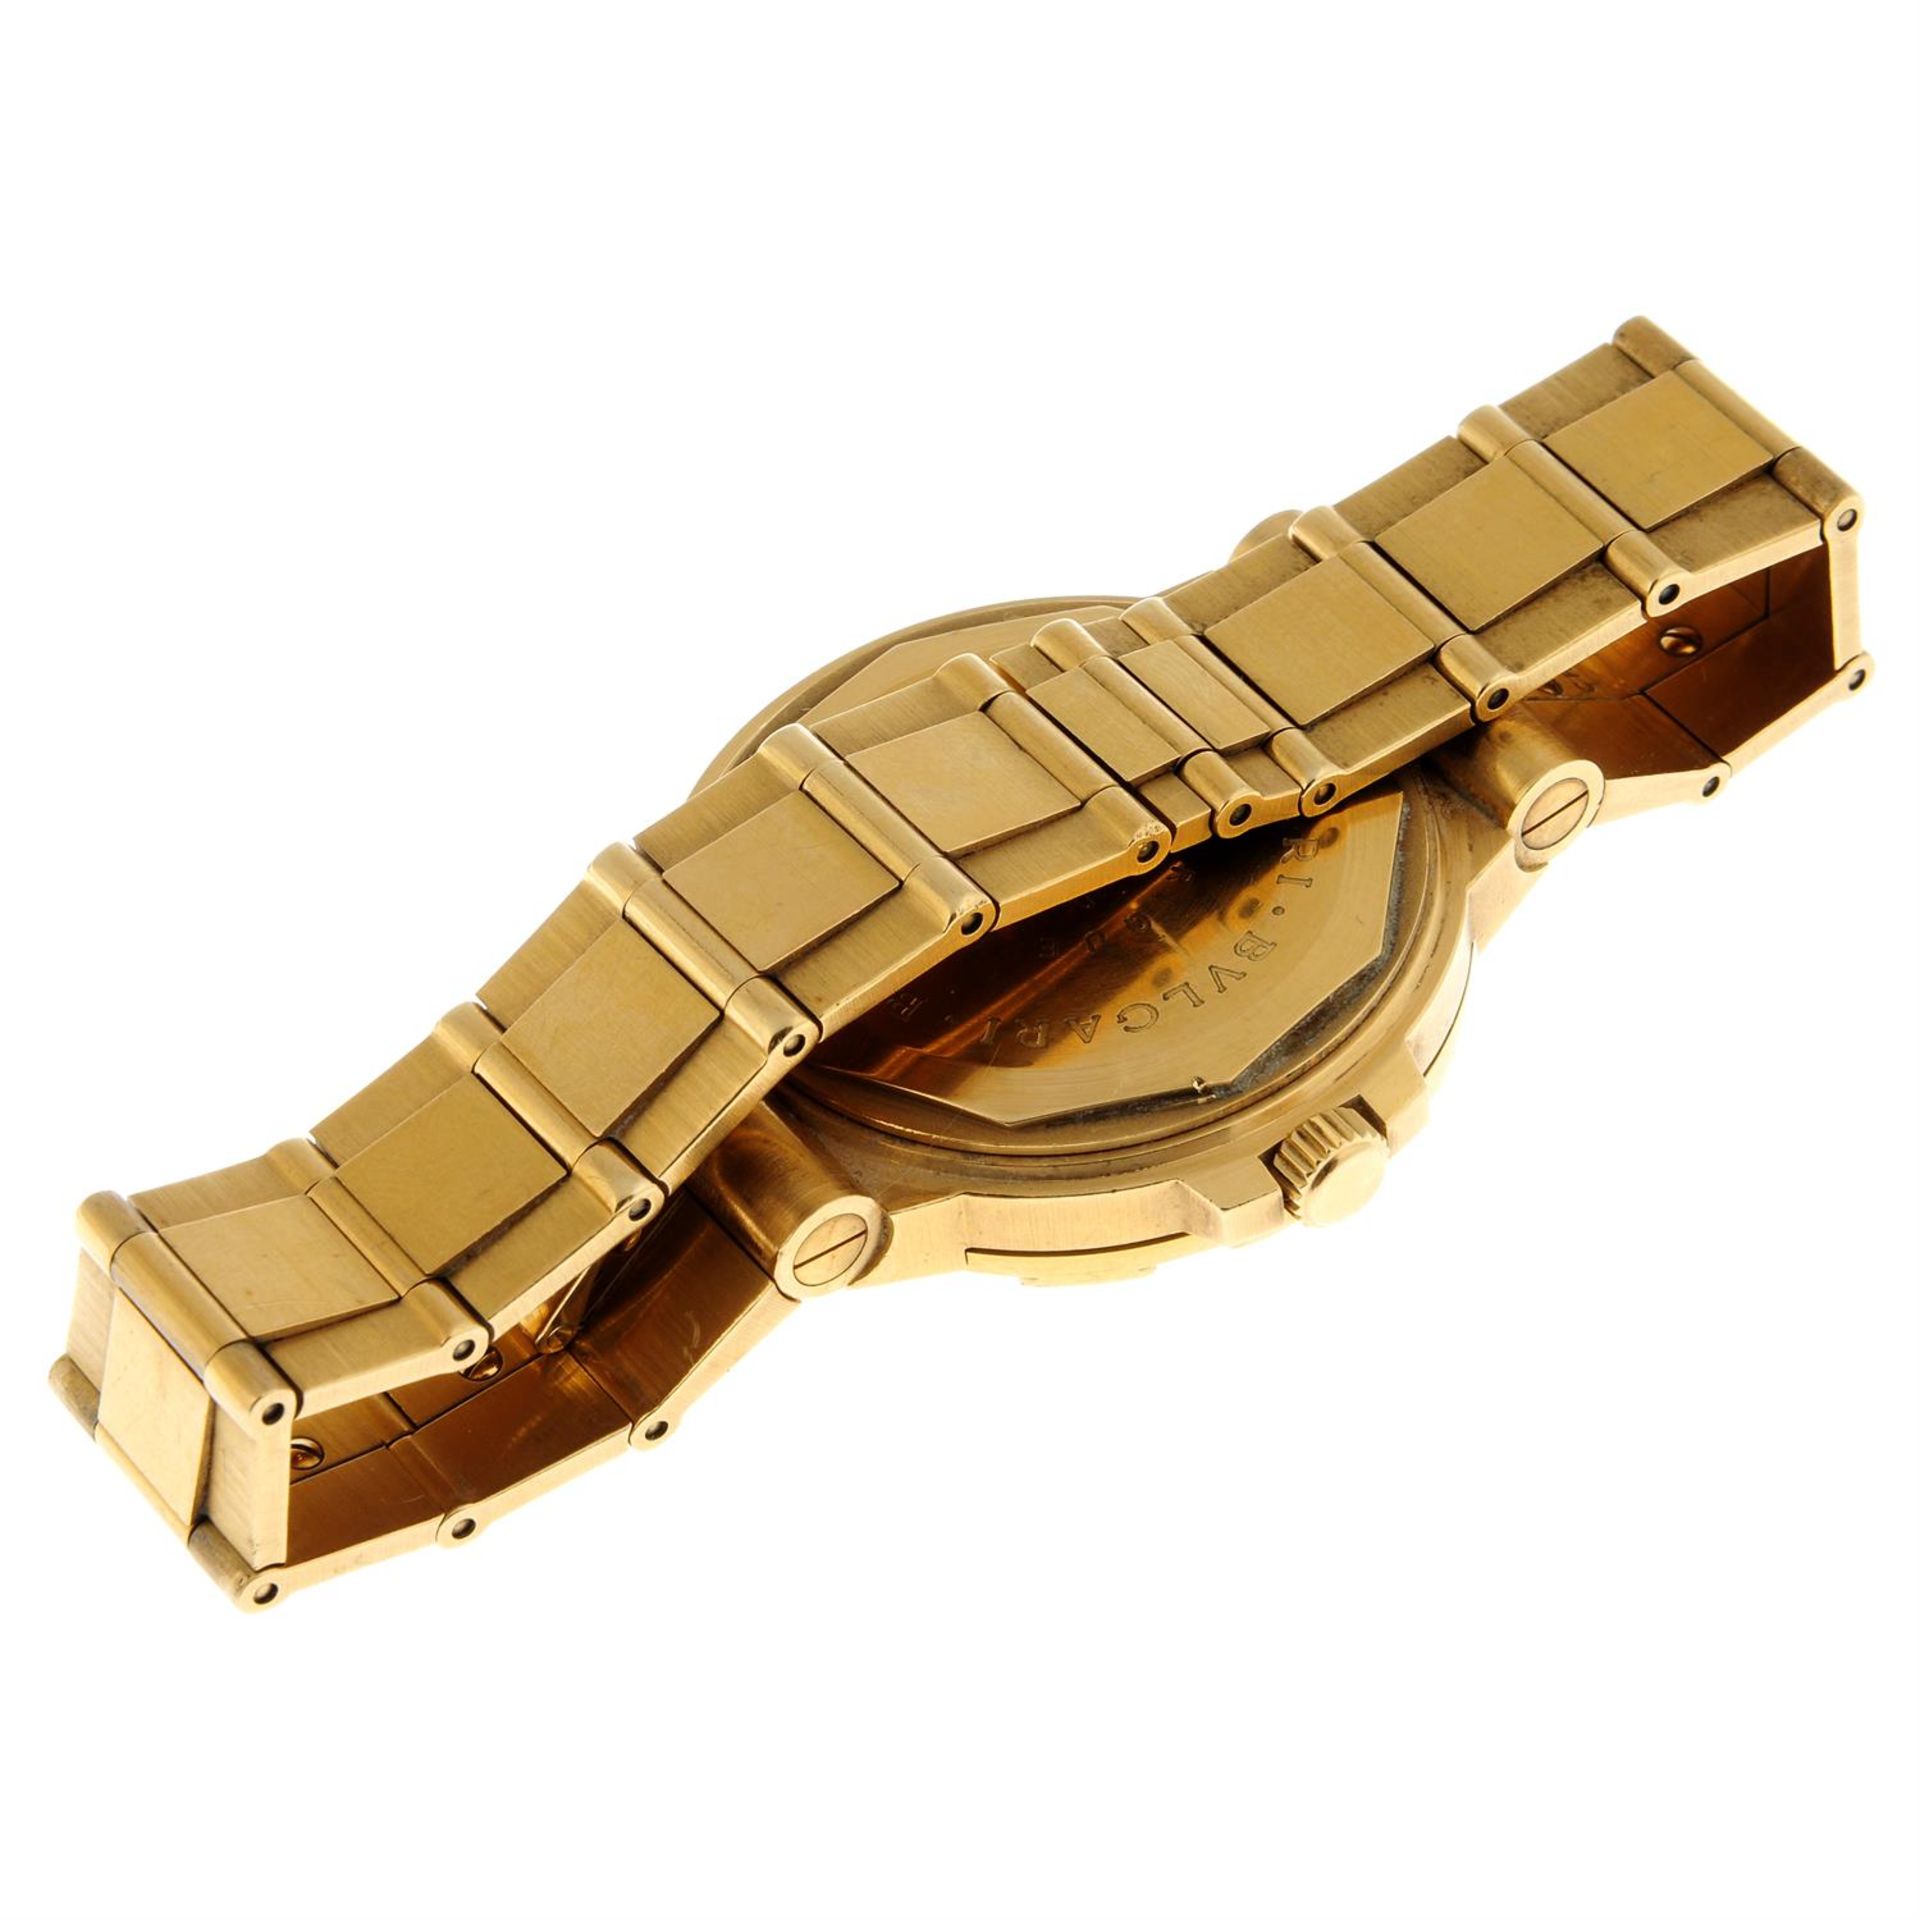 BULGARI - an 18ct yellow gold Diagono Scuba bracelet watch, 38mm. - Image 3 of 5